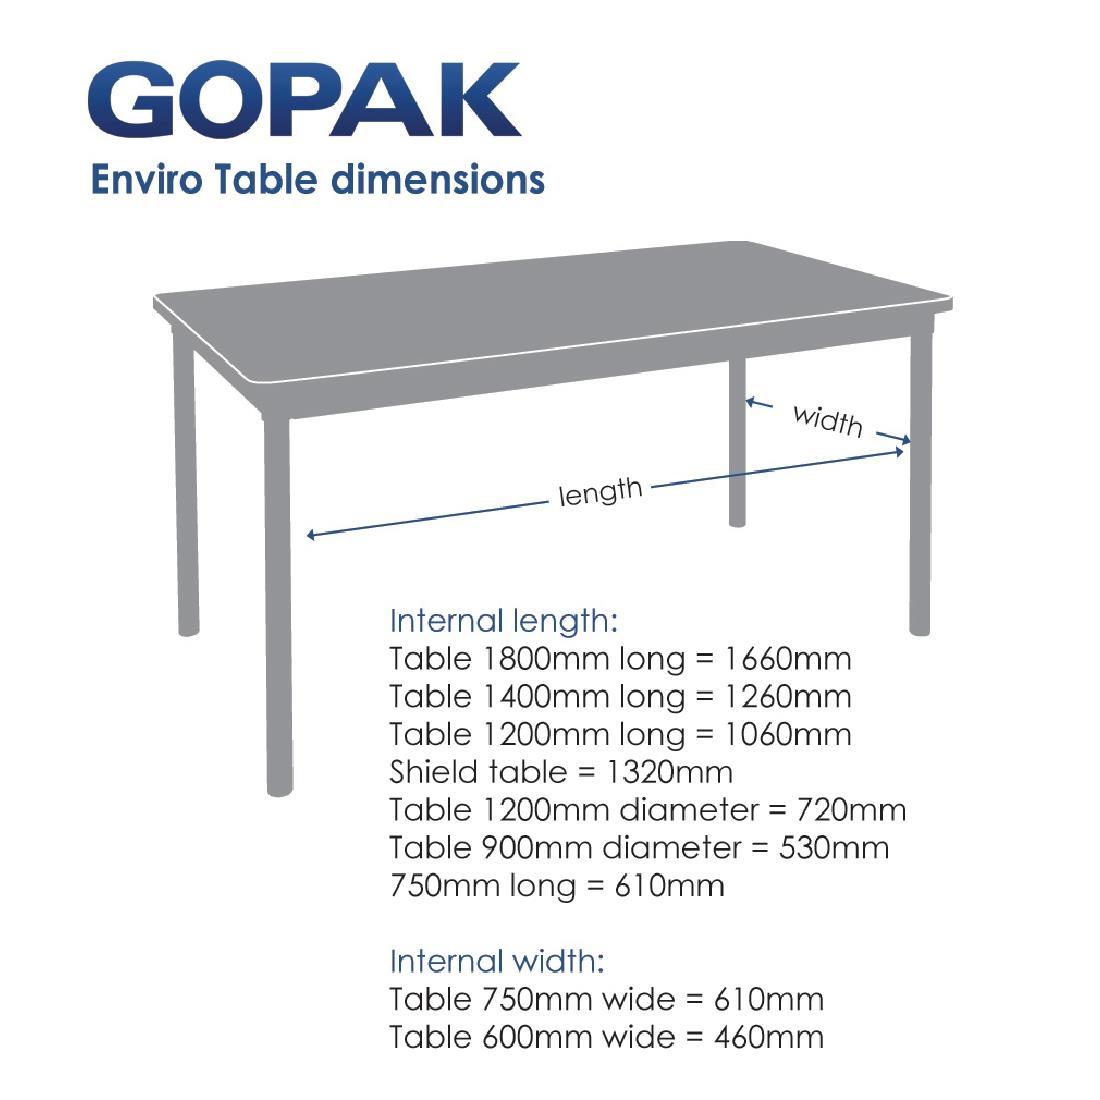 Gopak Enviro Indoor Campanula Blue Square Dining Table 750mm - GE972  - 2